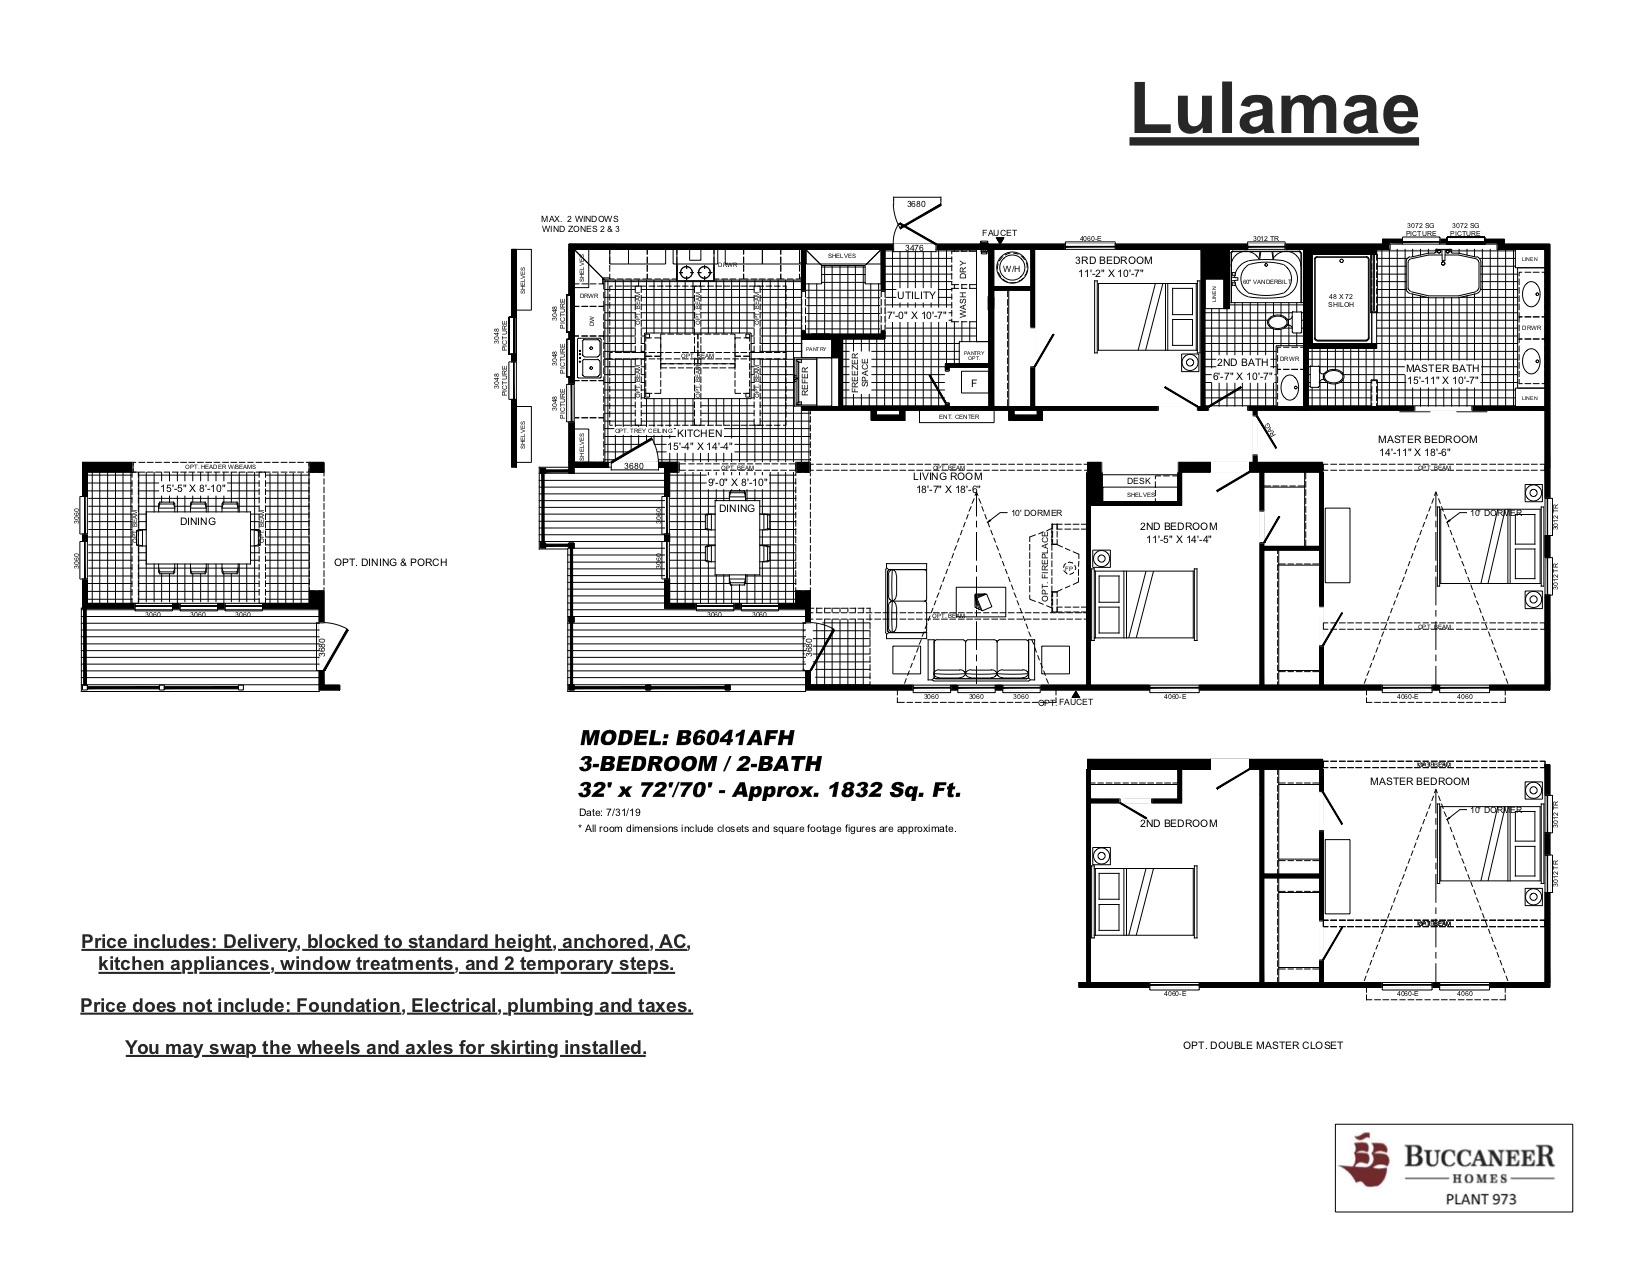 Lulamae Jim Tatman's Mobile Homes